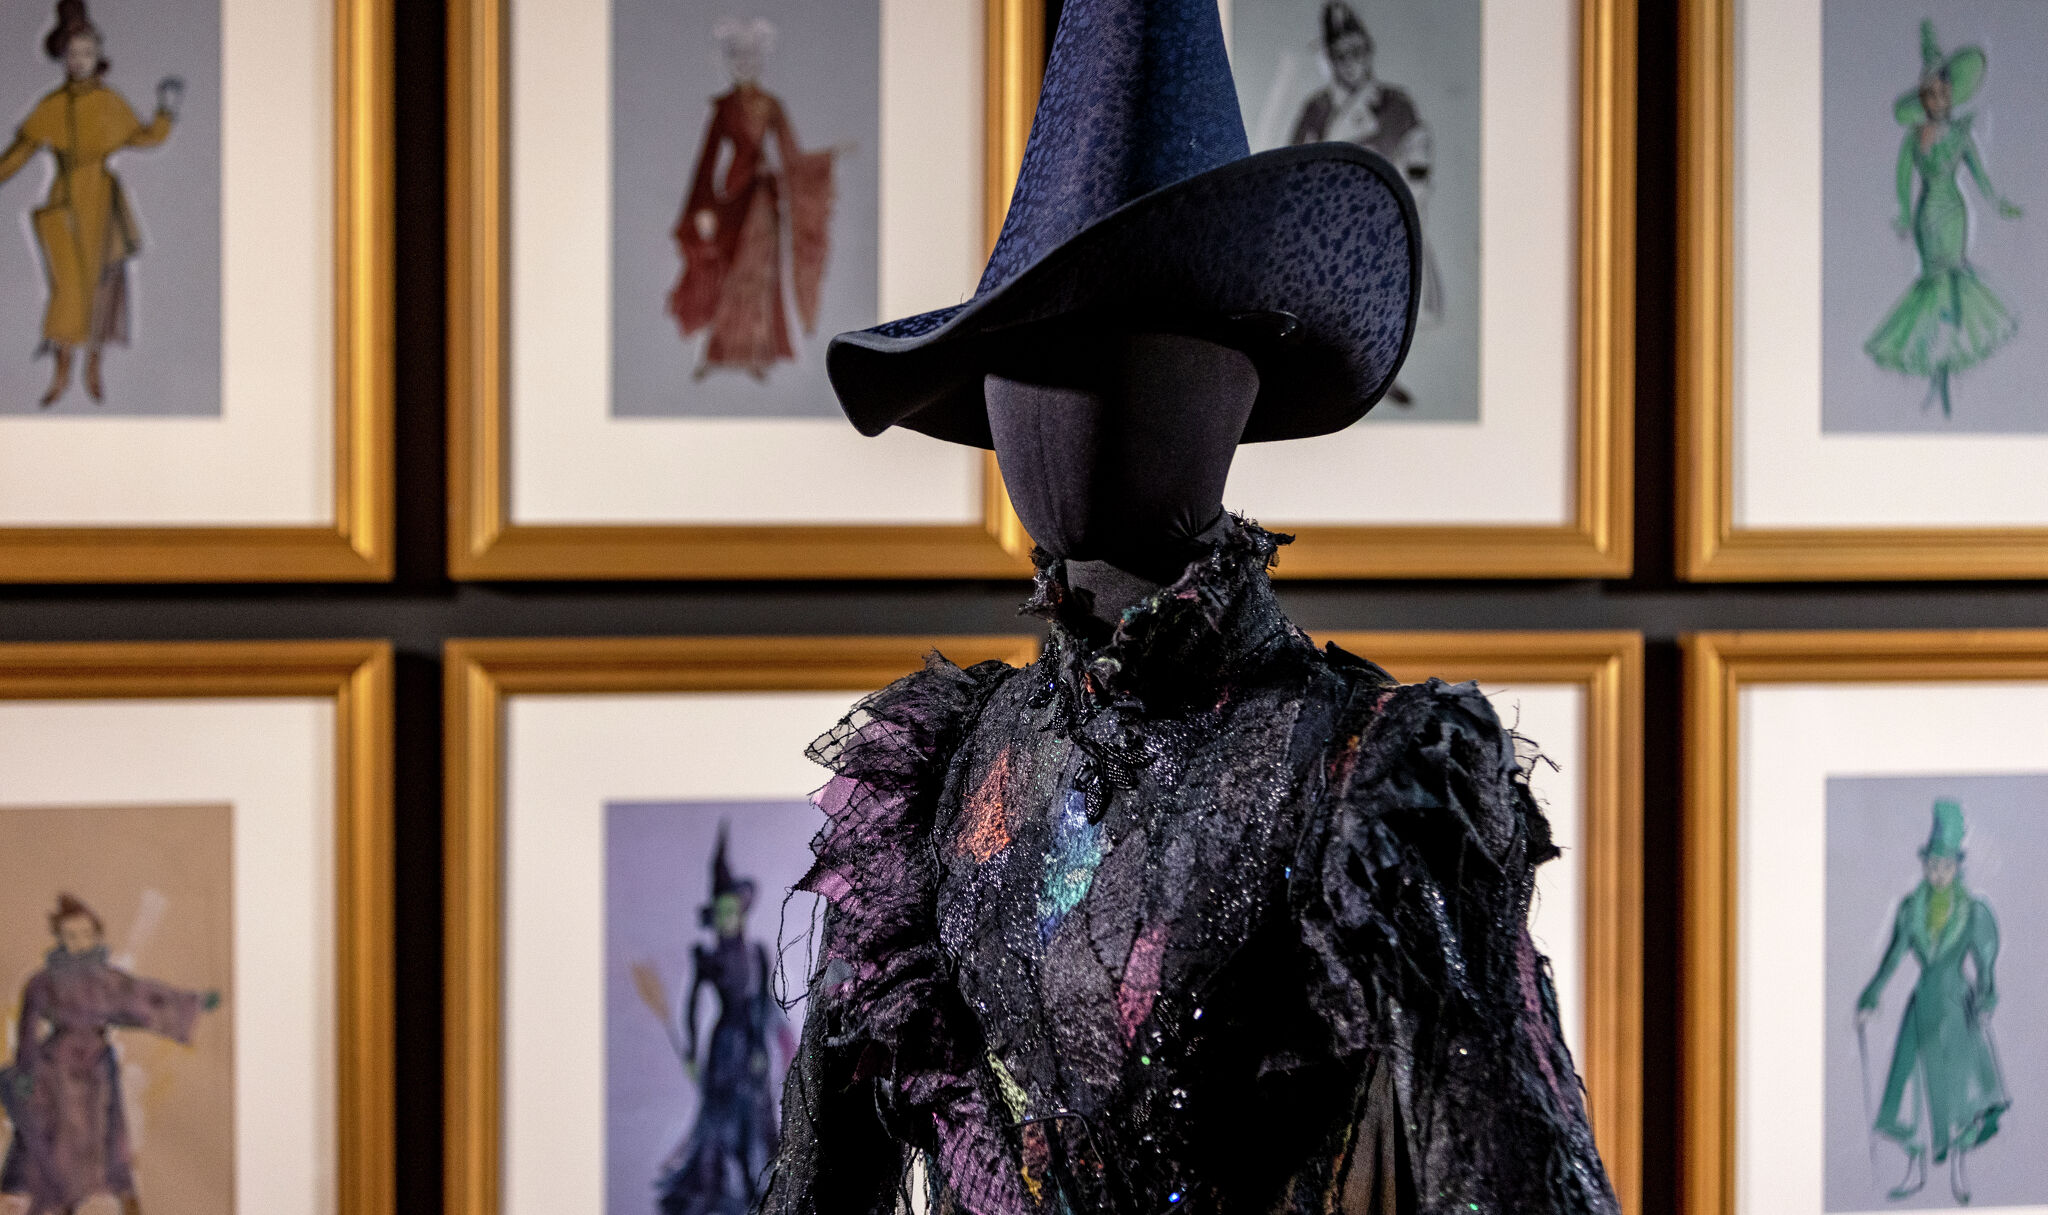 'Wicked' costume designer brings collection to San Antonio